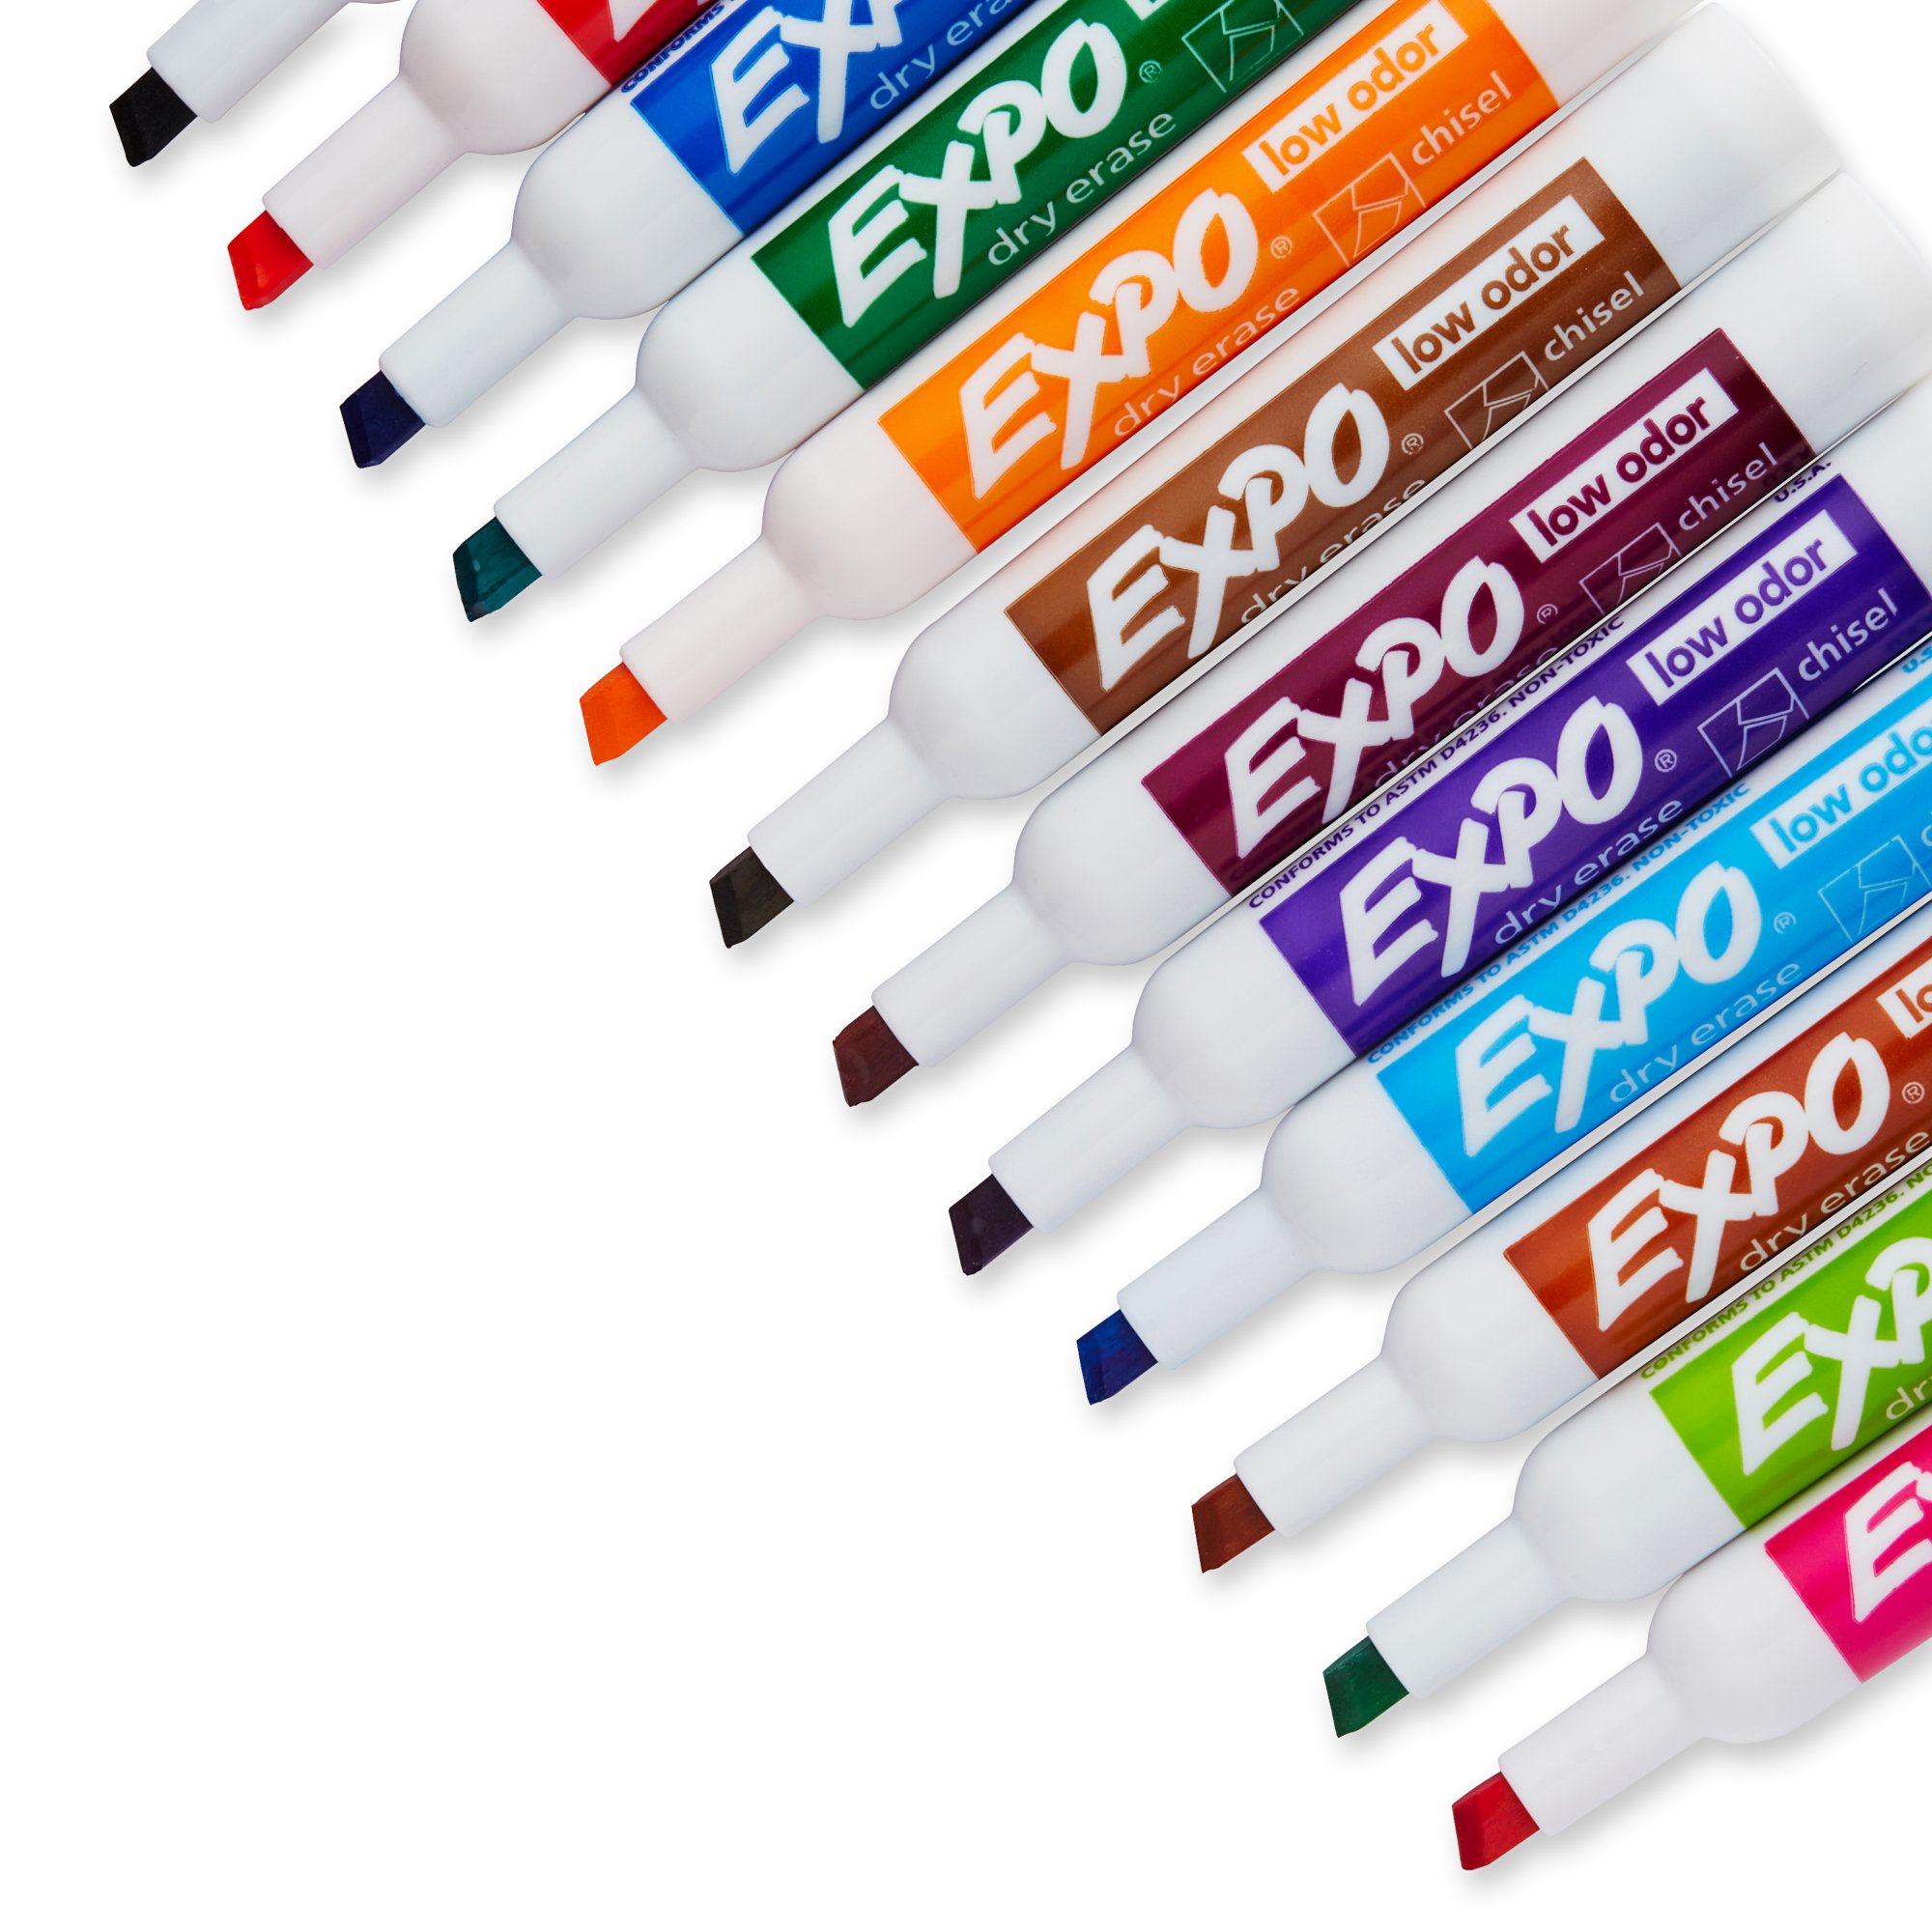 Expo Dry Erase Aquamarine Low Odor Chisel Tip Marker